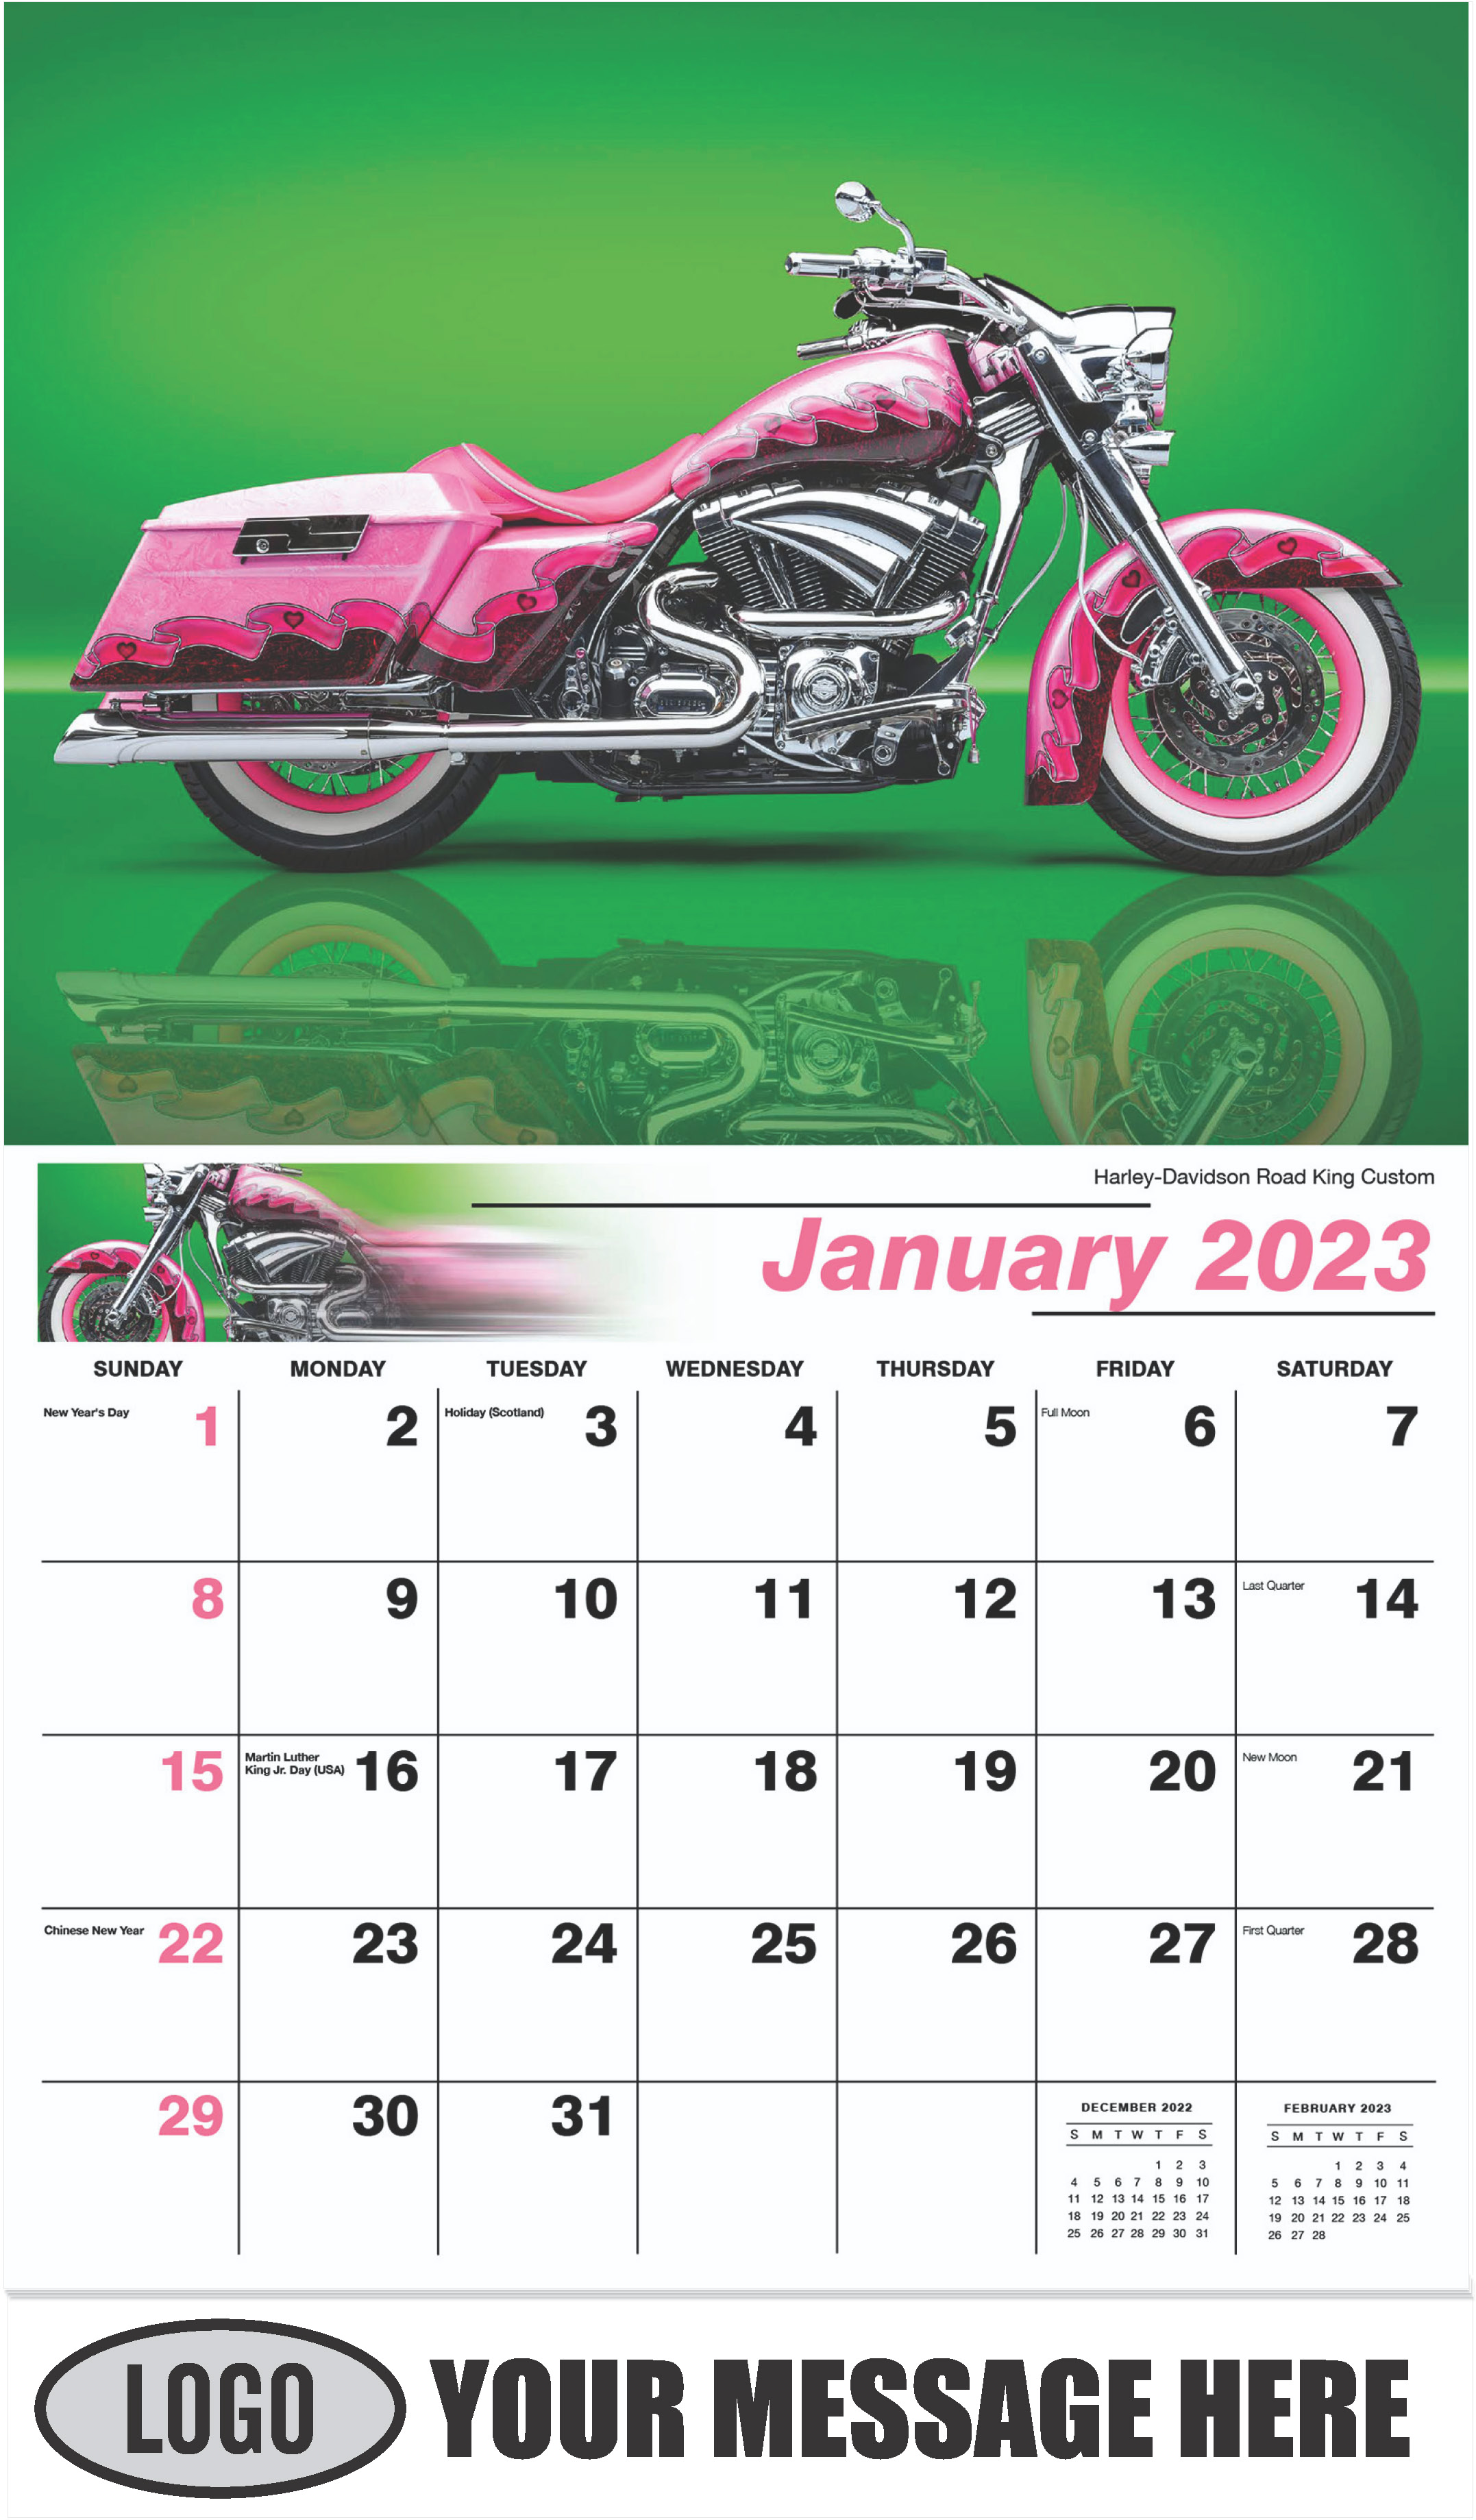 Harley-Davidson Road King Custom - January - Motorcycle Mania 2023 Promotional Calendar